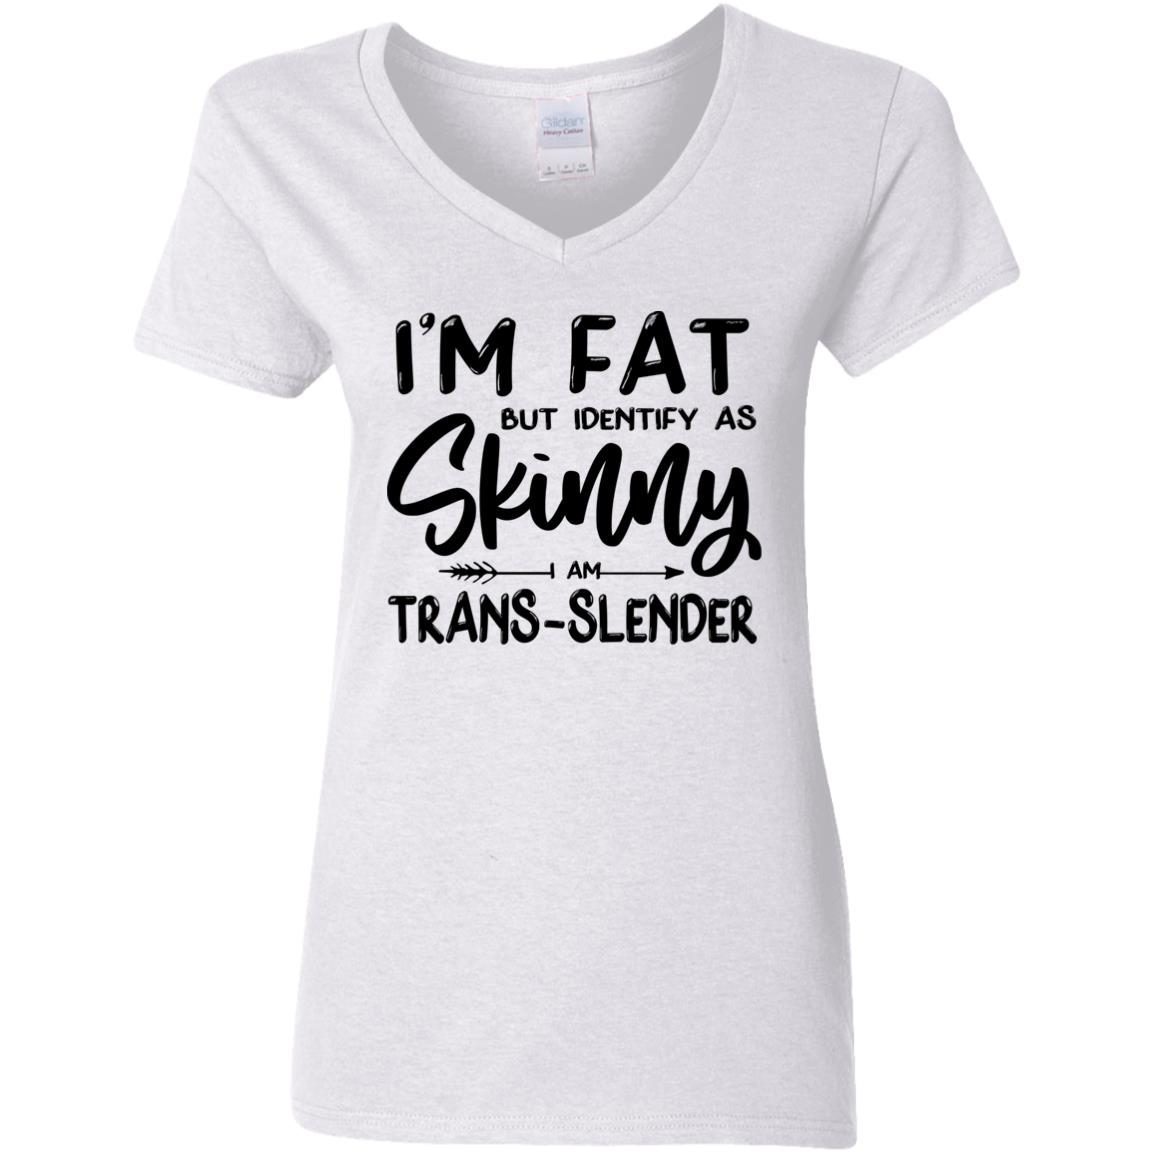 I’m Fat But Identify As Skinny I Am Trans-Slender shirt